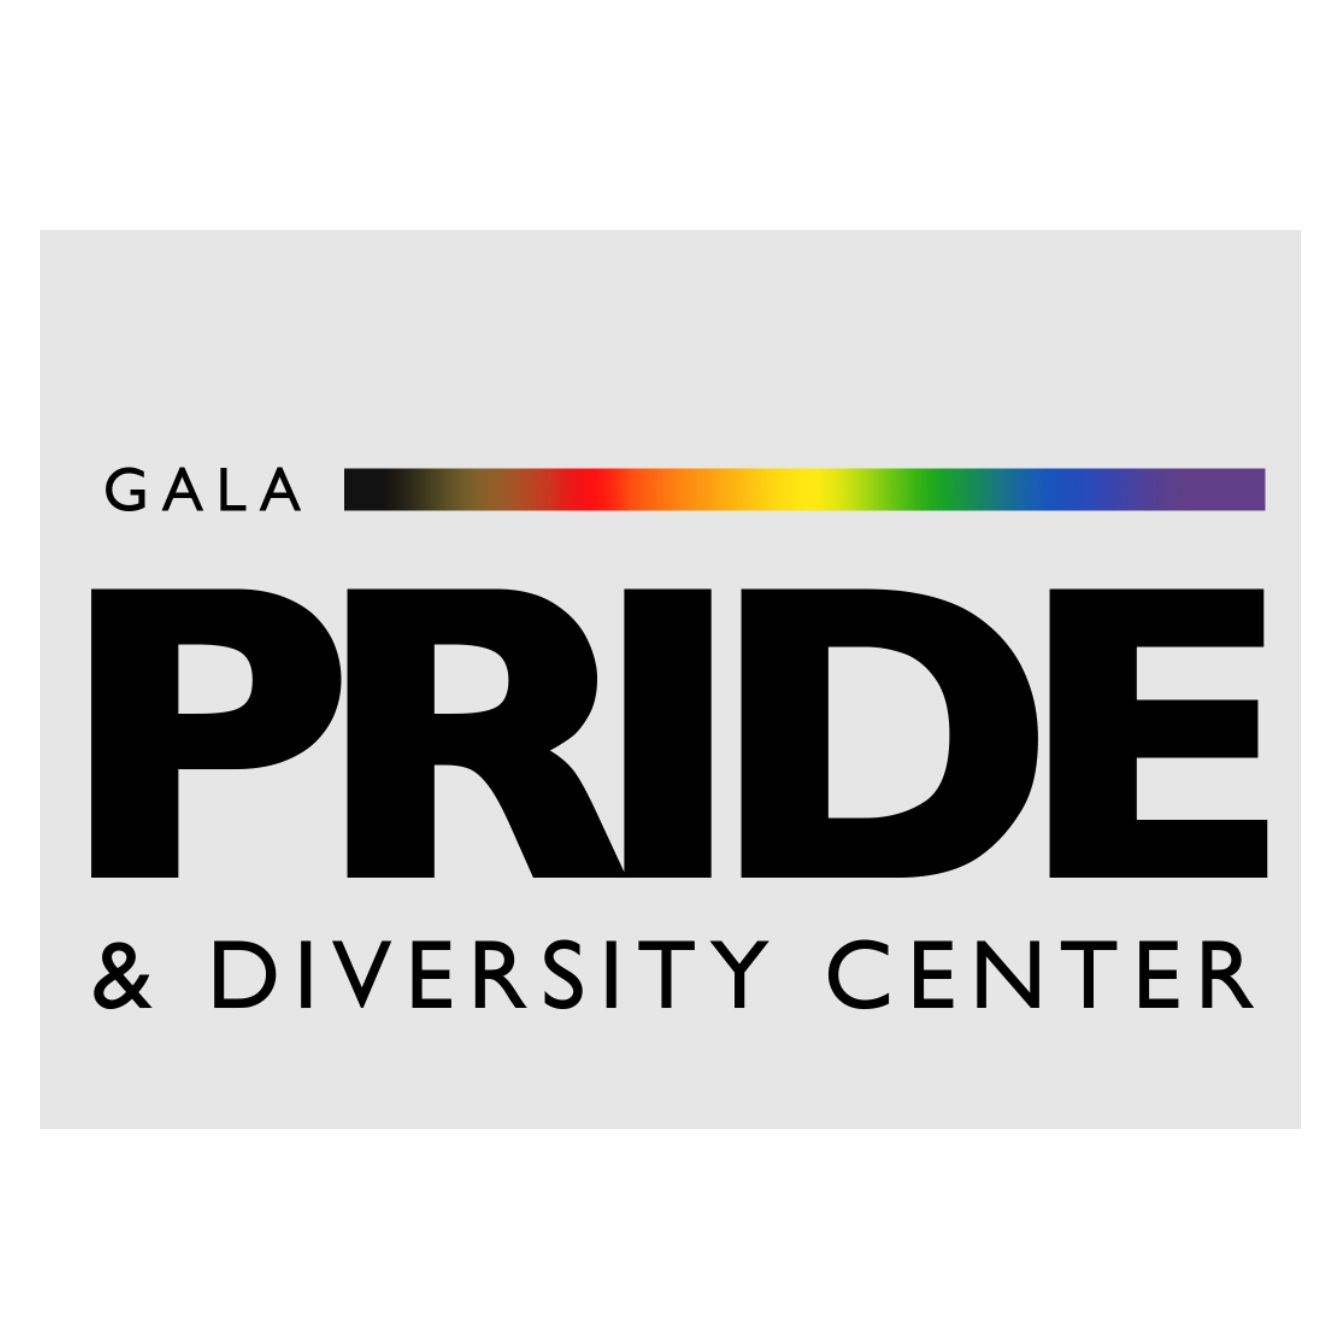 LGBTQ Organization in Los Angeles California - Gala Pride and Diversity Center